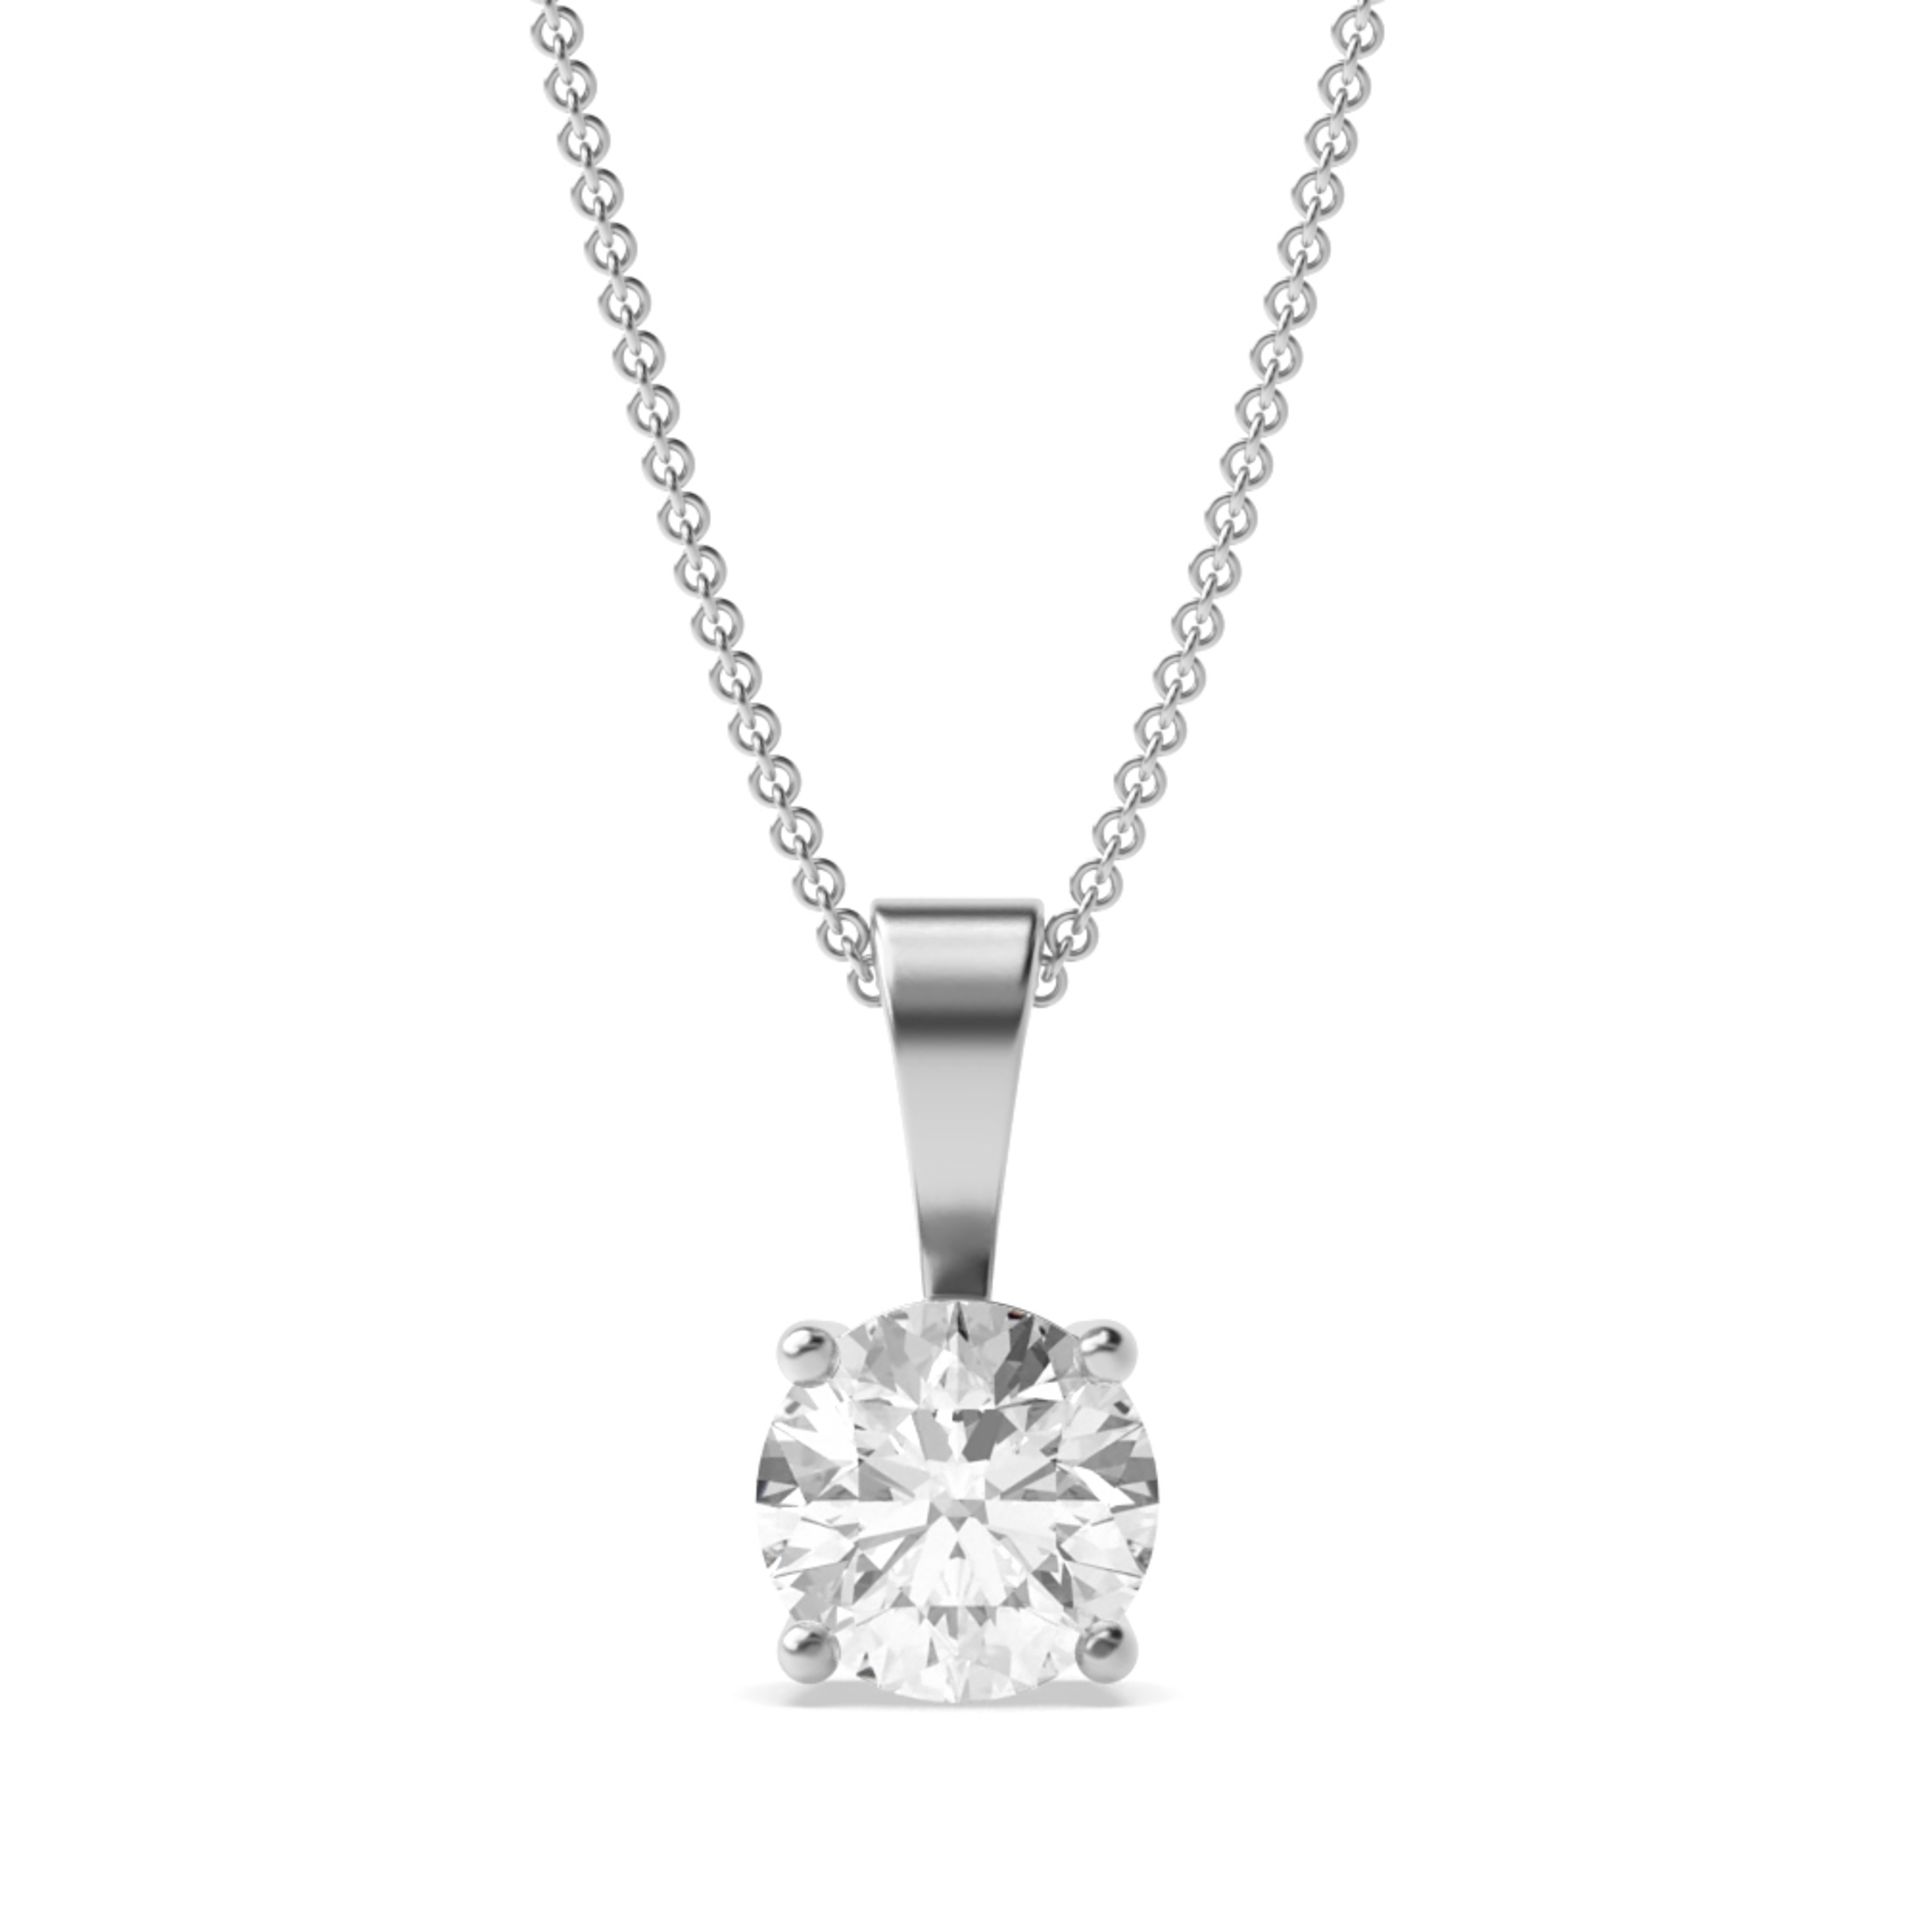 Round Brilliant Cut Diamond 1.00 Carat F Colour VS2 Clarity - Necklace Pendant - 18kt White Gold